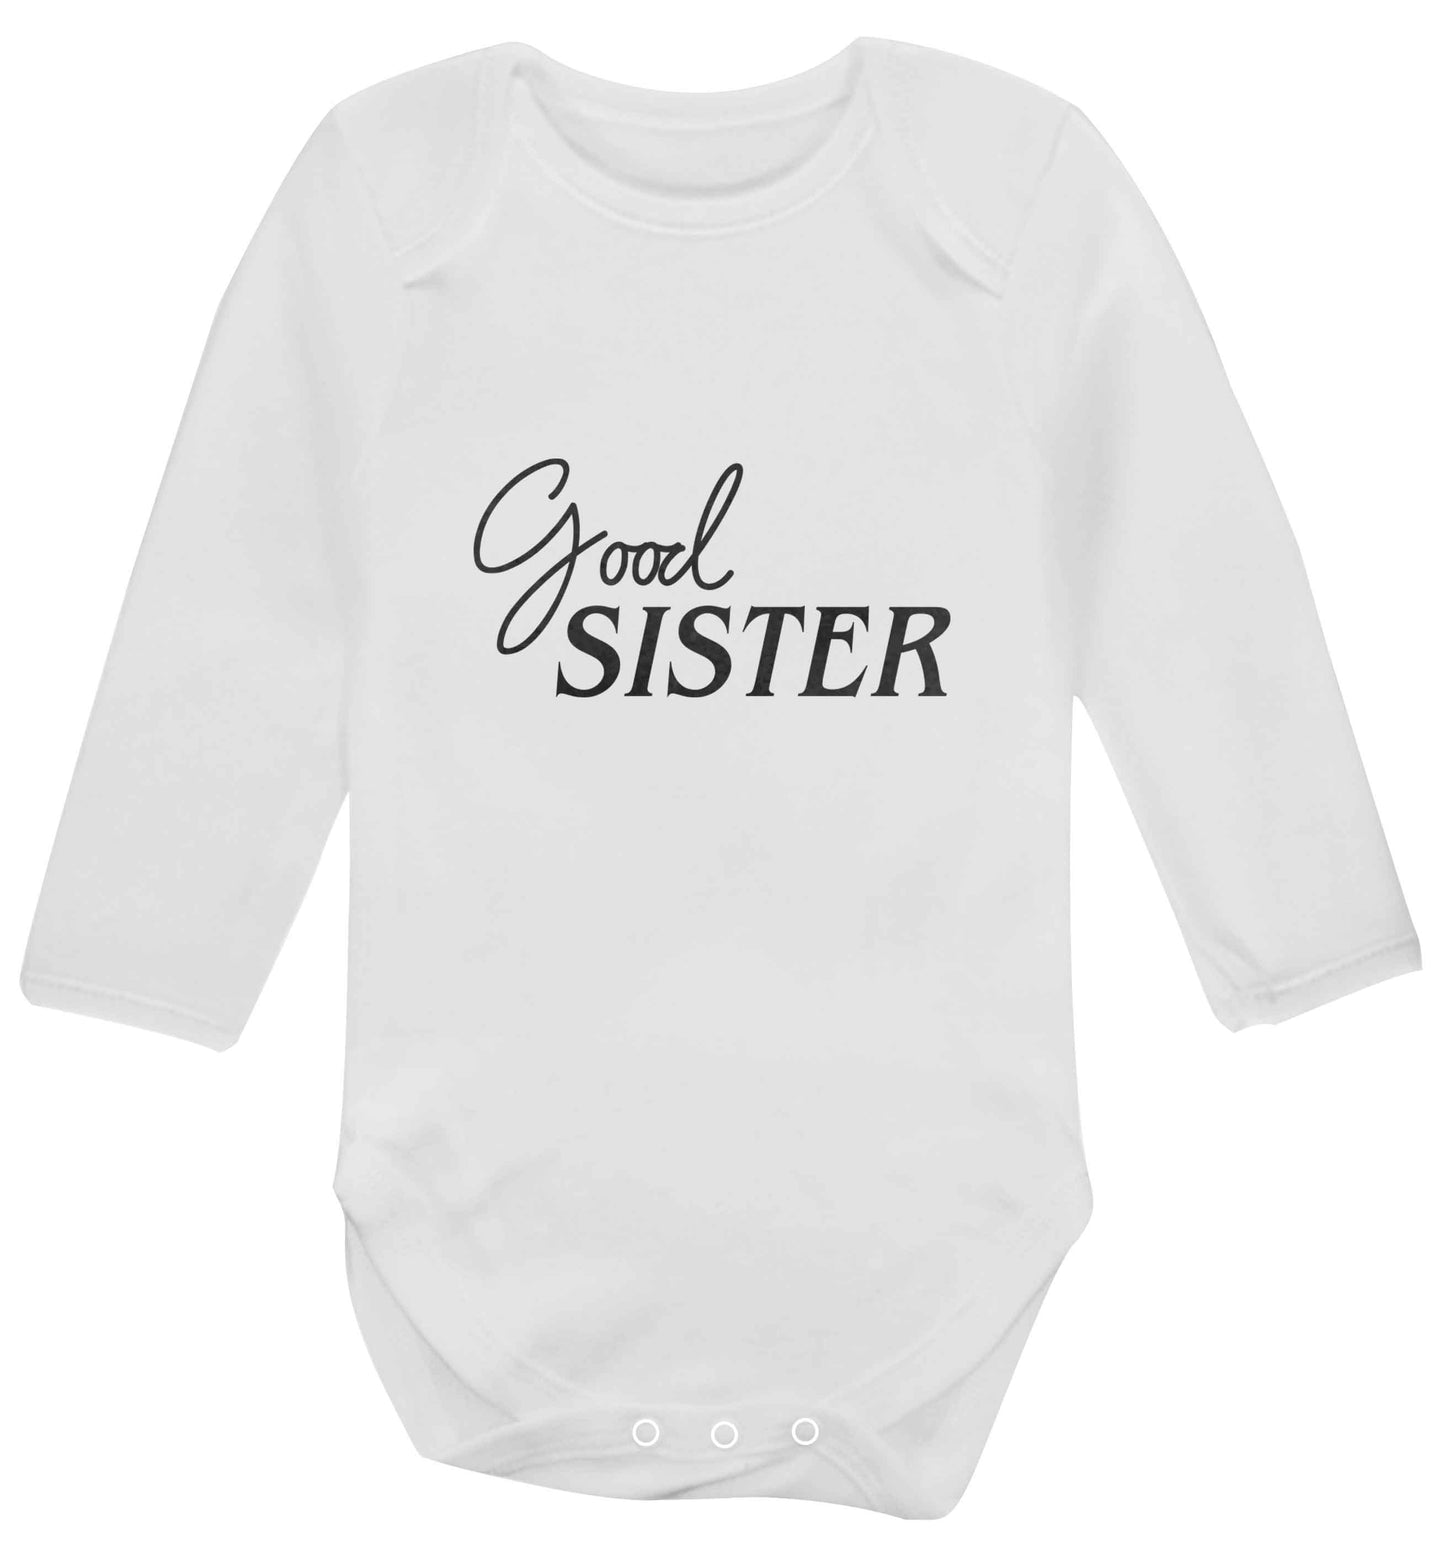 Good sister baby vest long sleeved white 6-12 months